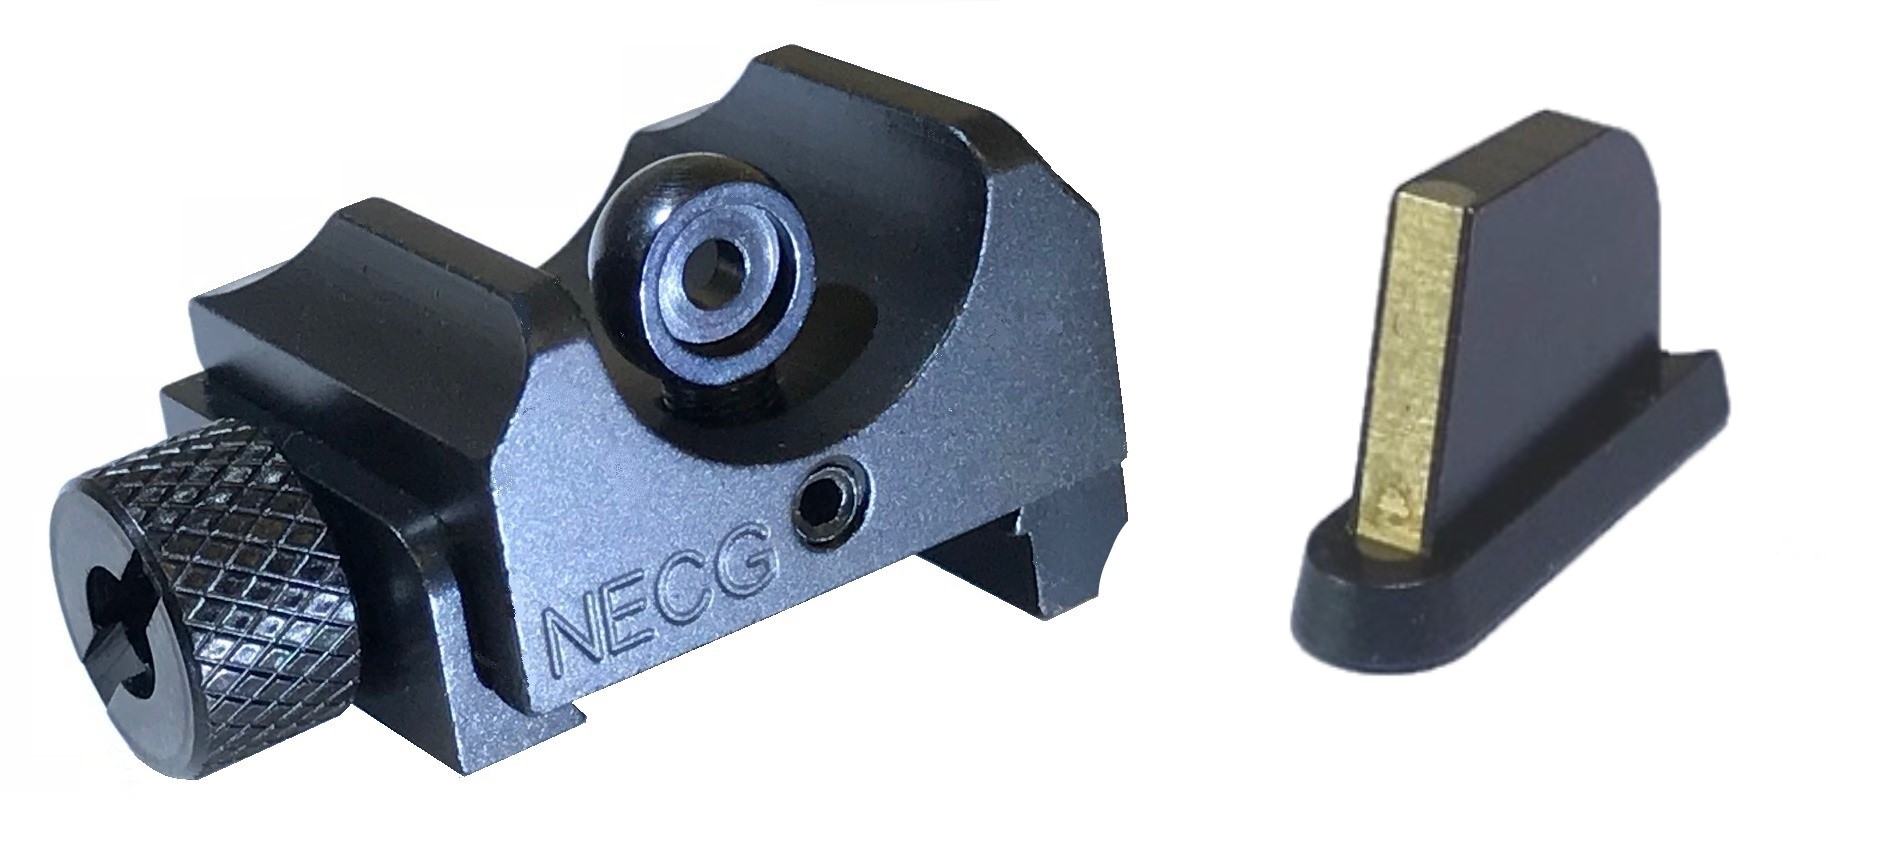 NECG CZ 550 Ghost Ring Peep & Patridge Sight Set  N-109-Set